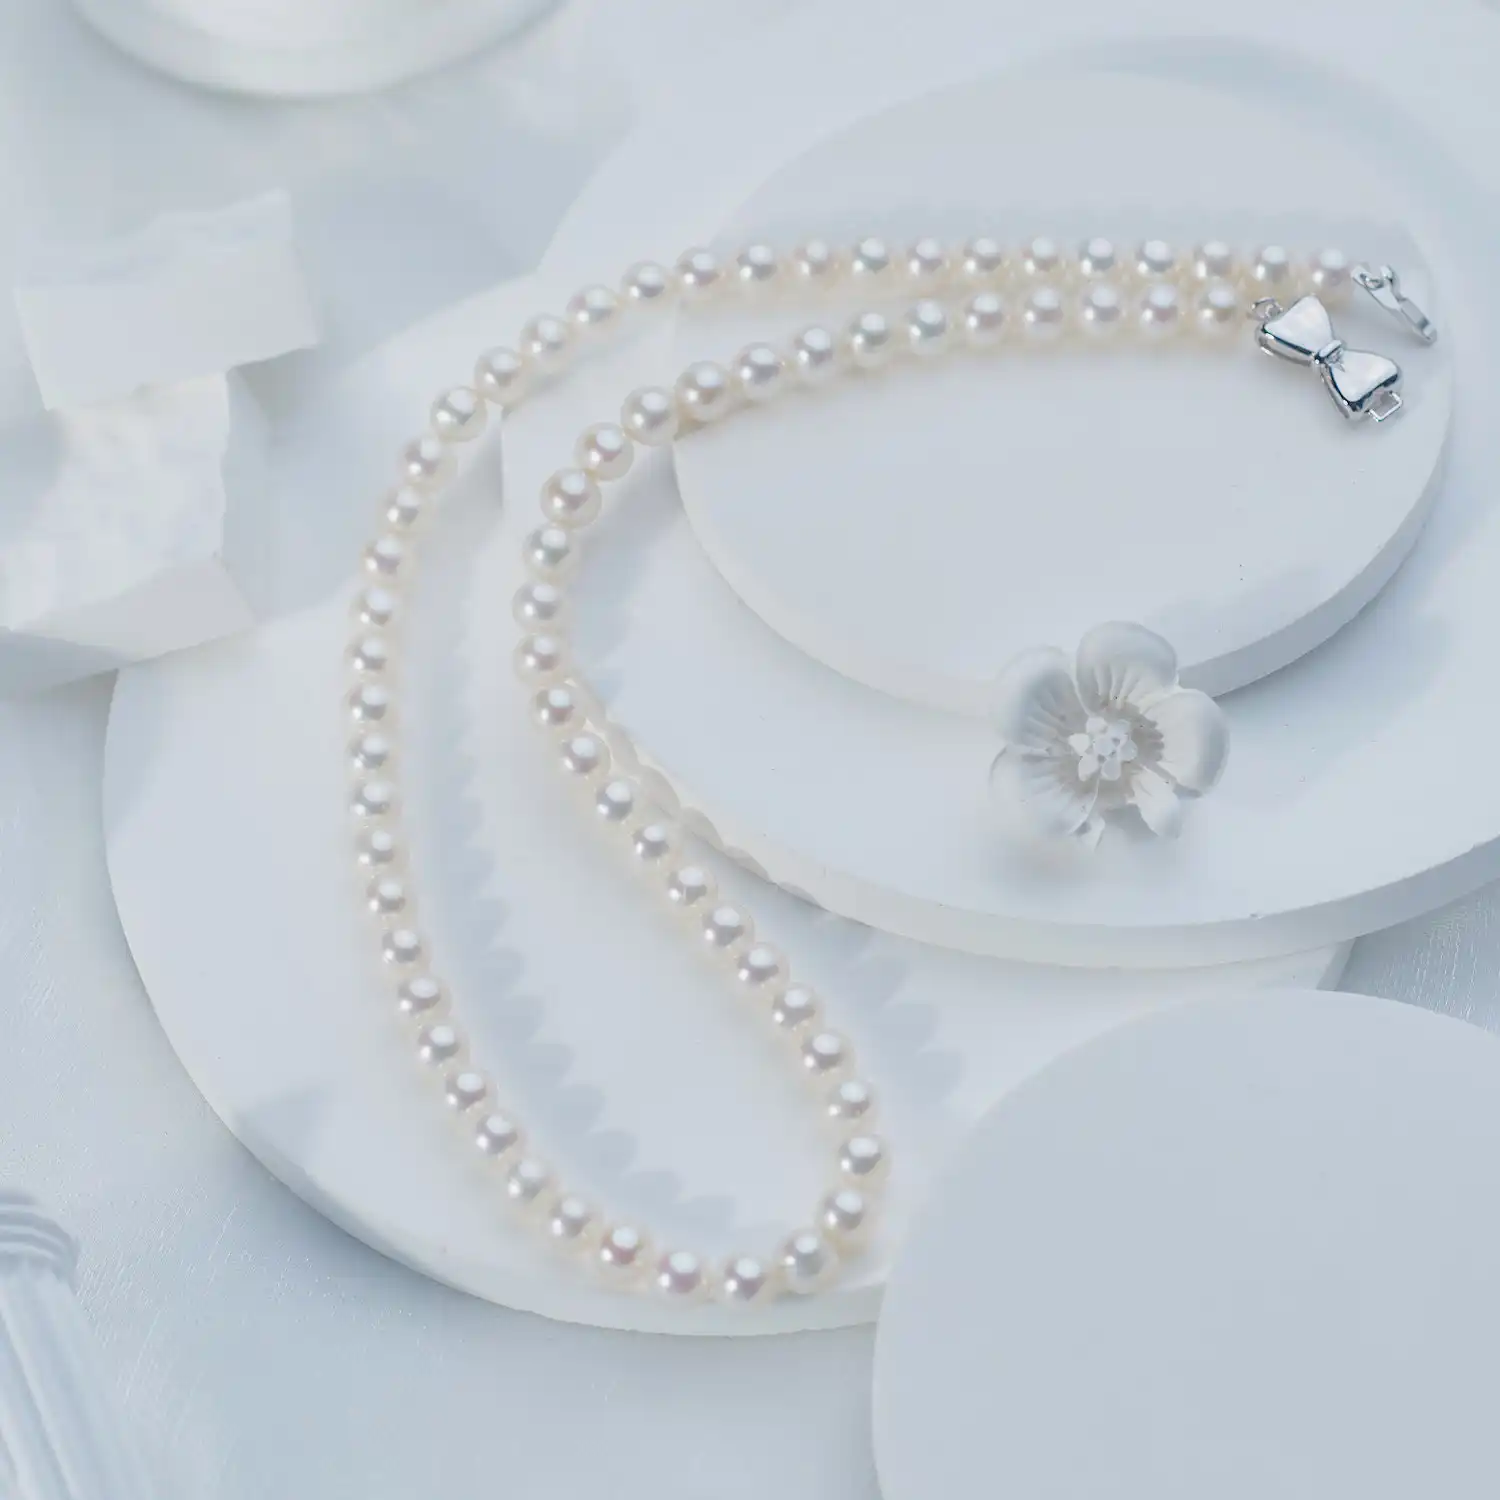 Genuino collar de perlas de agua dulce 6-7mm cerca de forma redonda forma de patata de plata esterlina